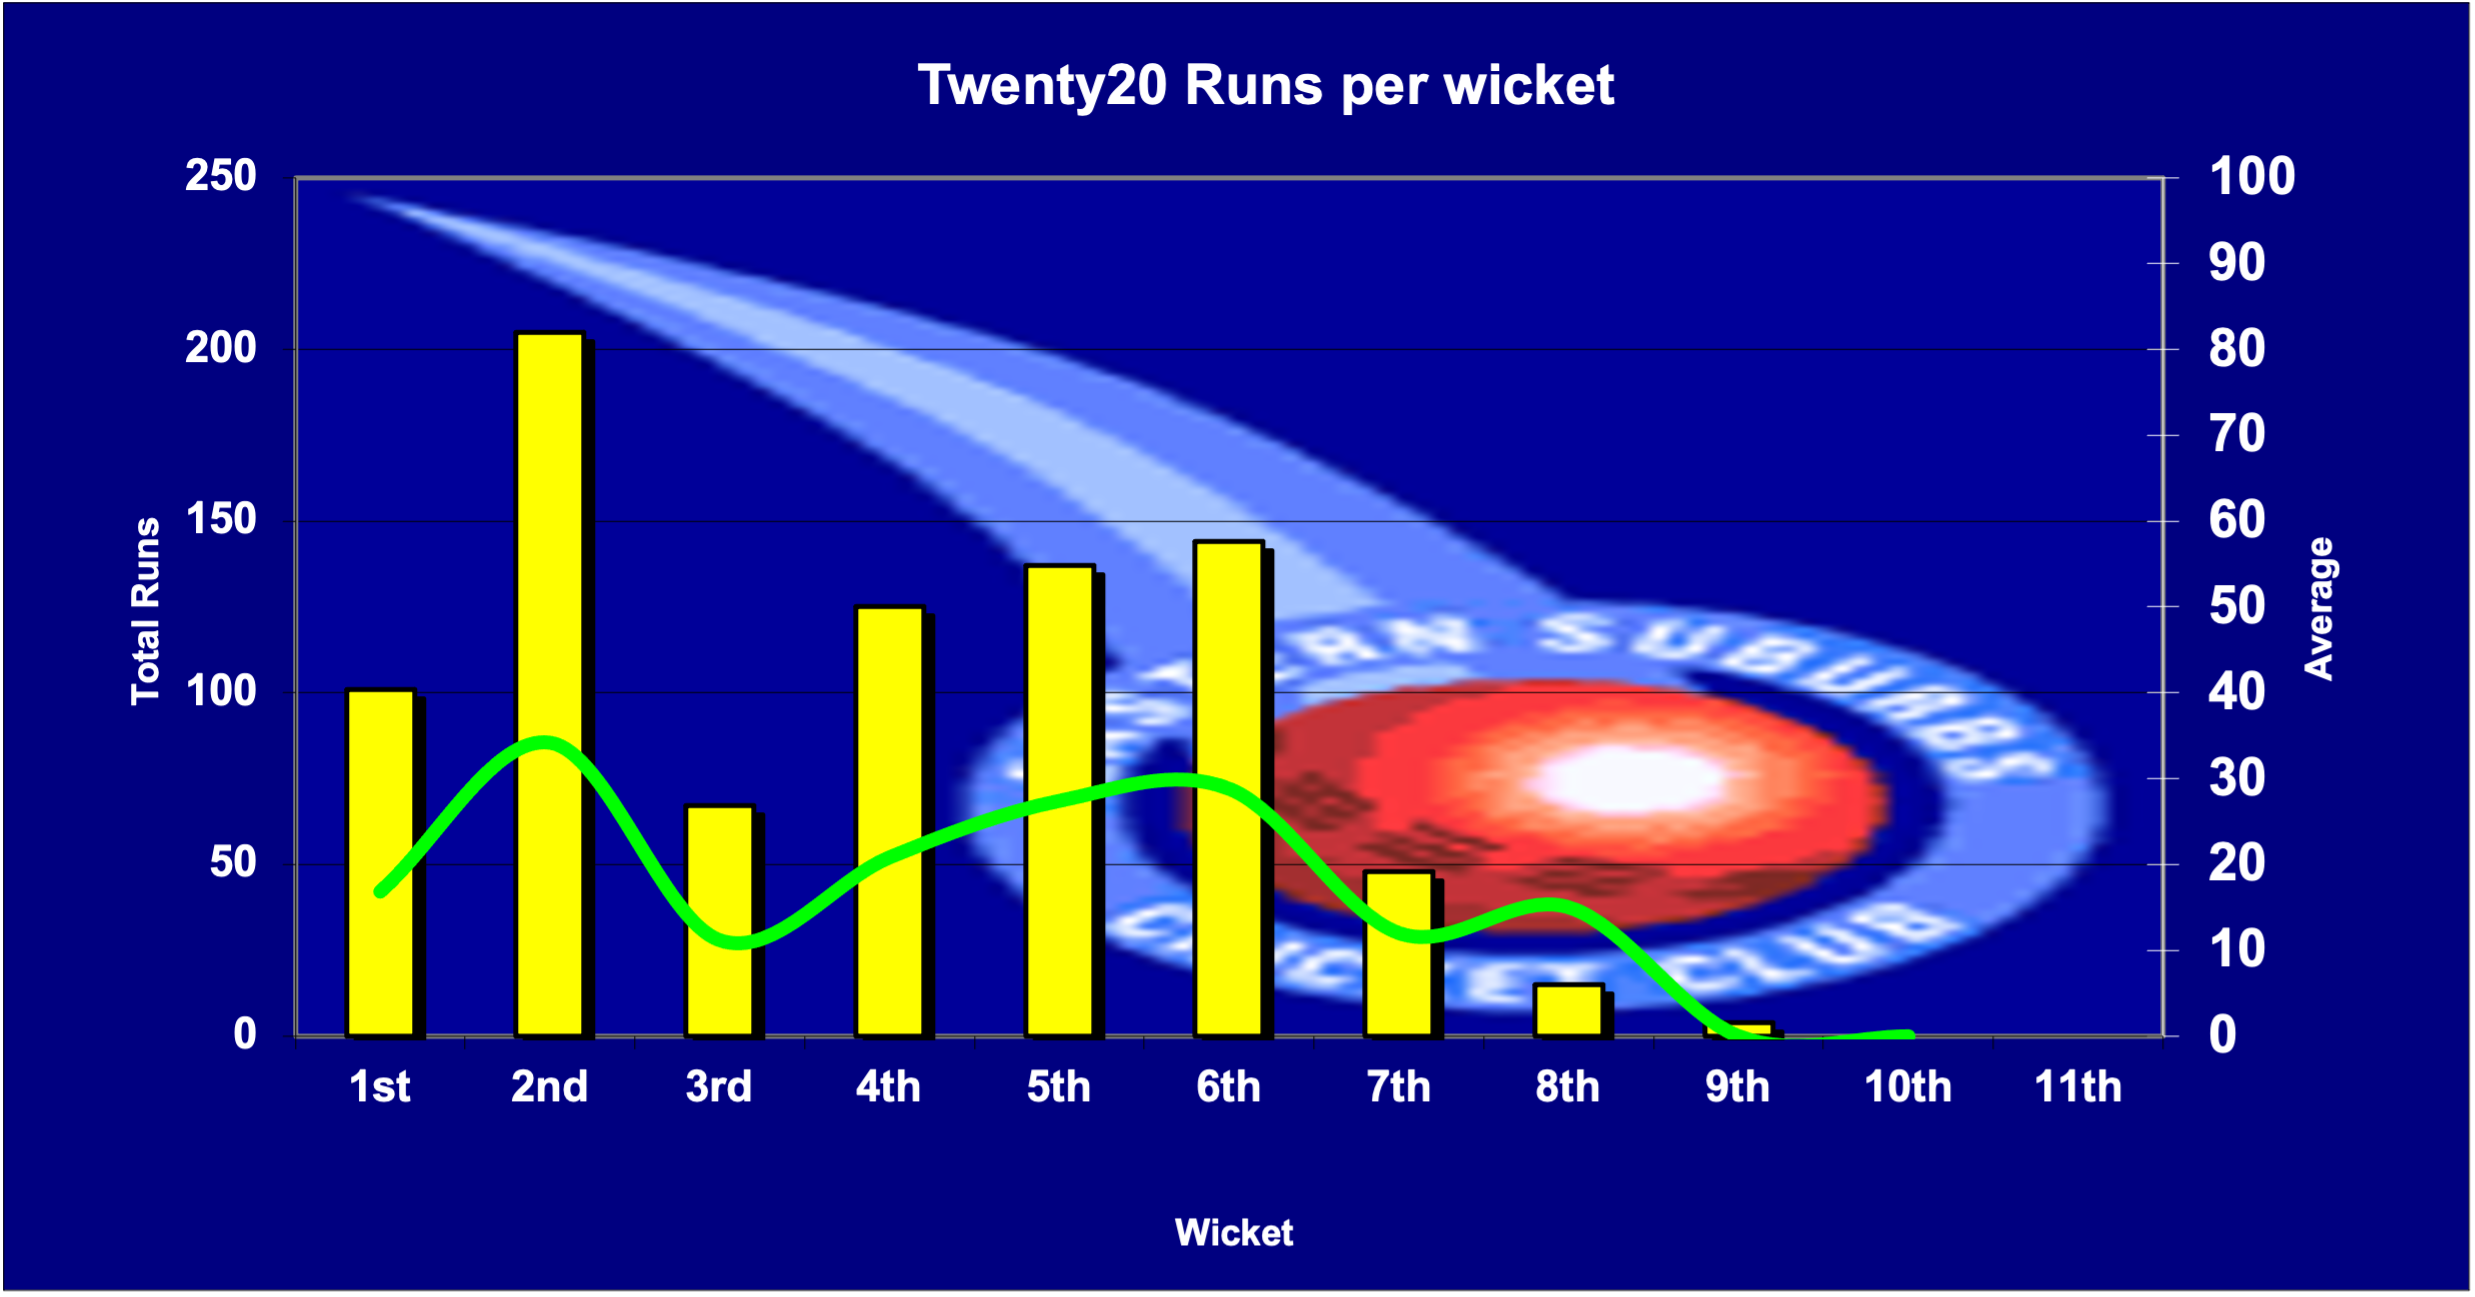 2020 Runs per wicket